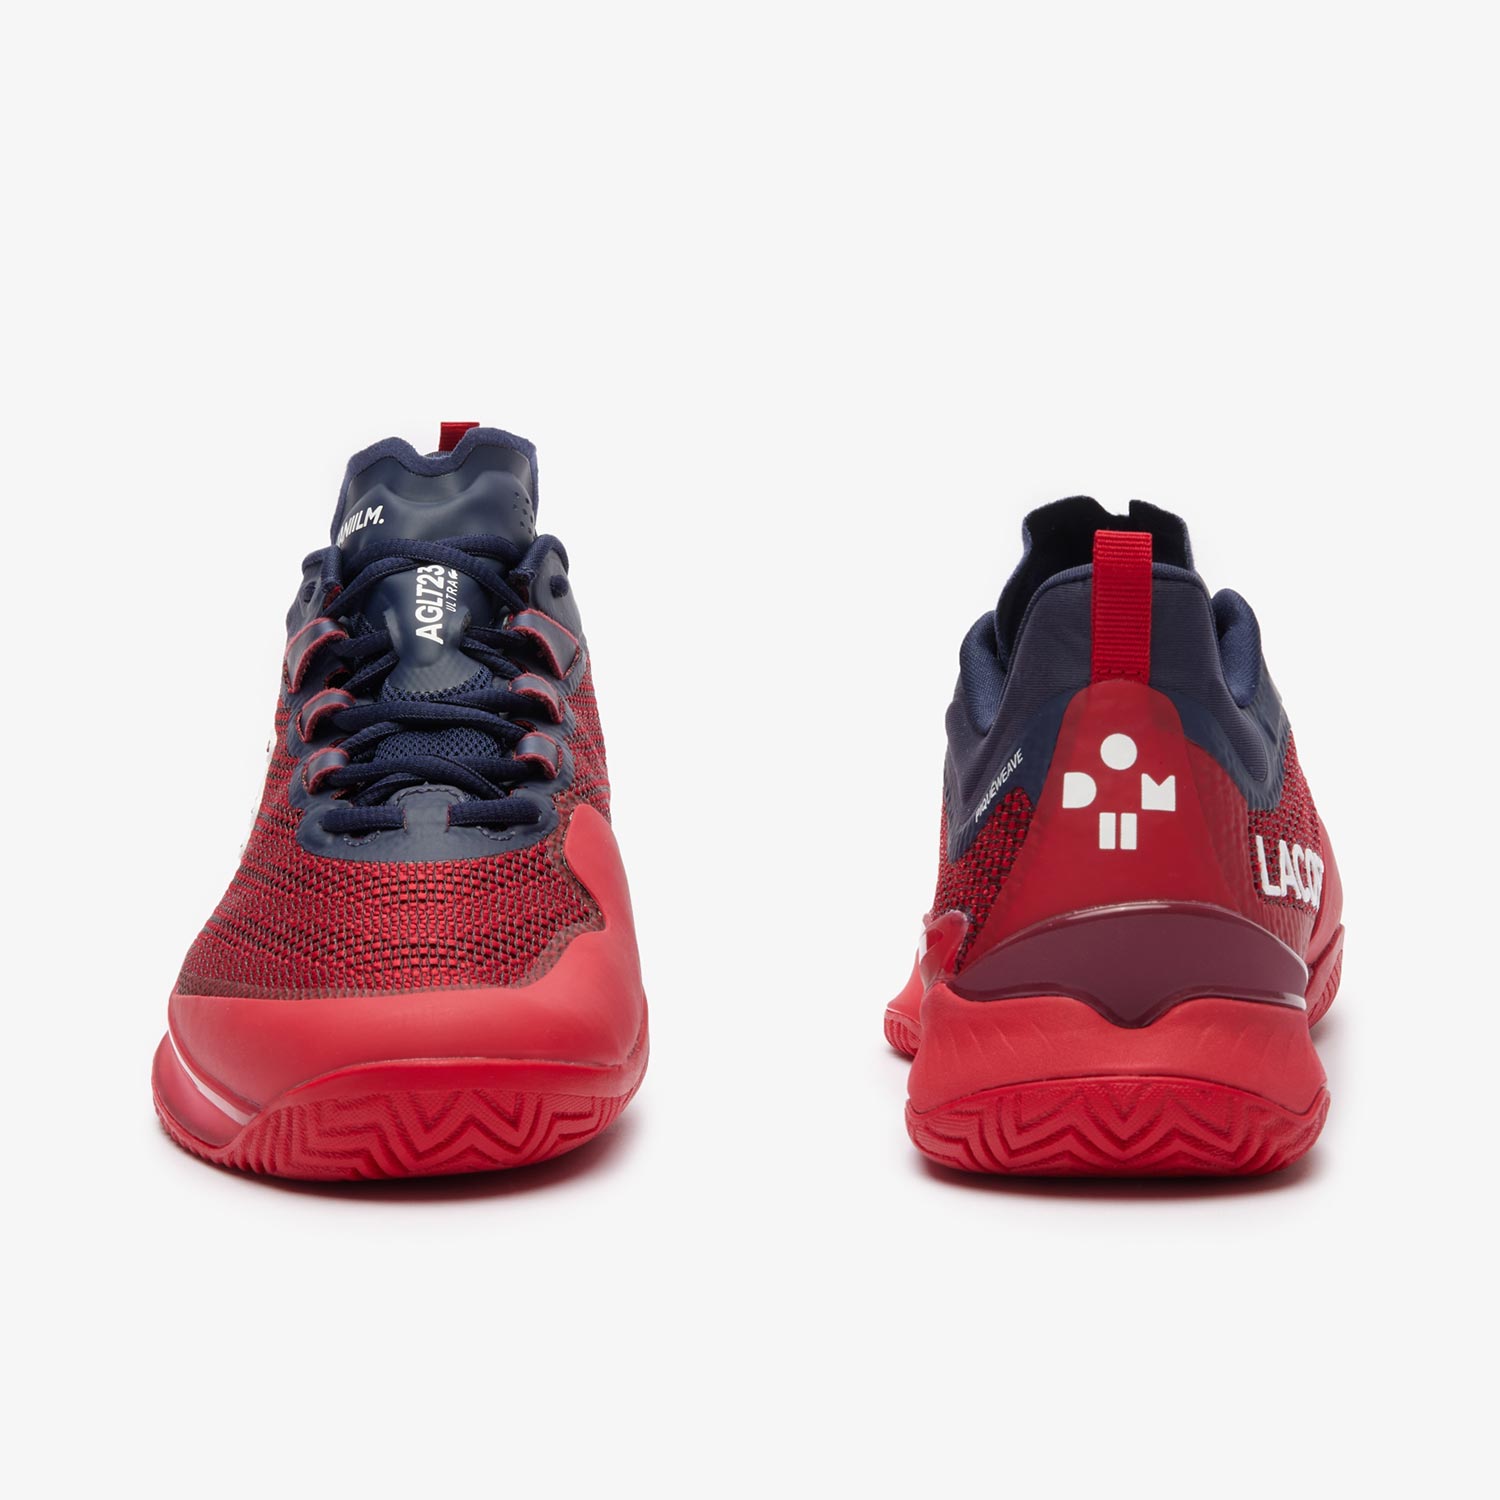 Lacoste AG-LT23 Ultra Men's Tennis Shoes - Red (6)